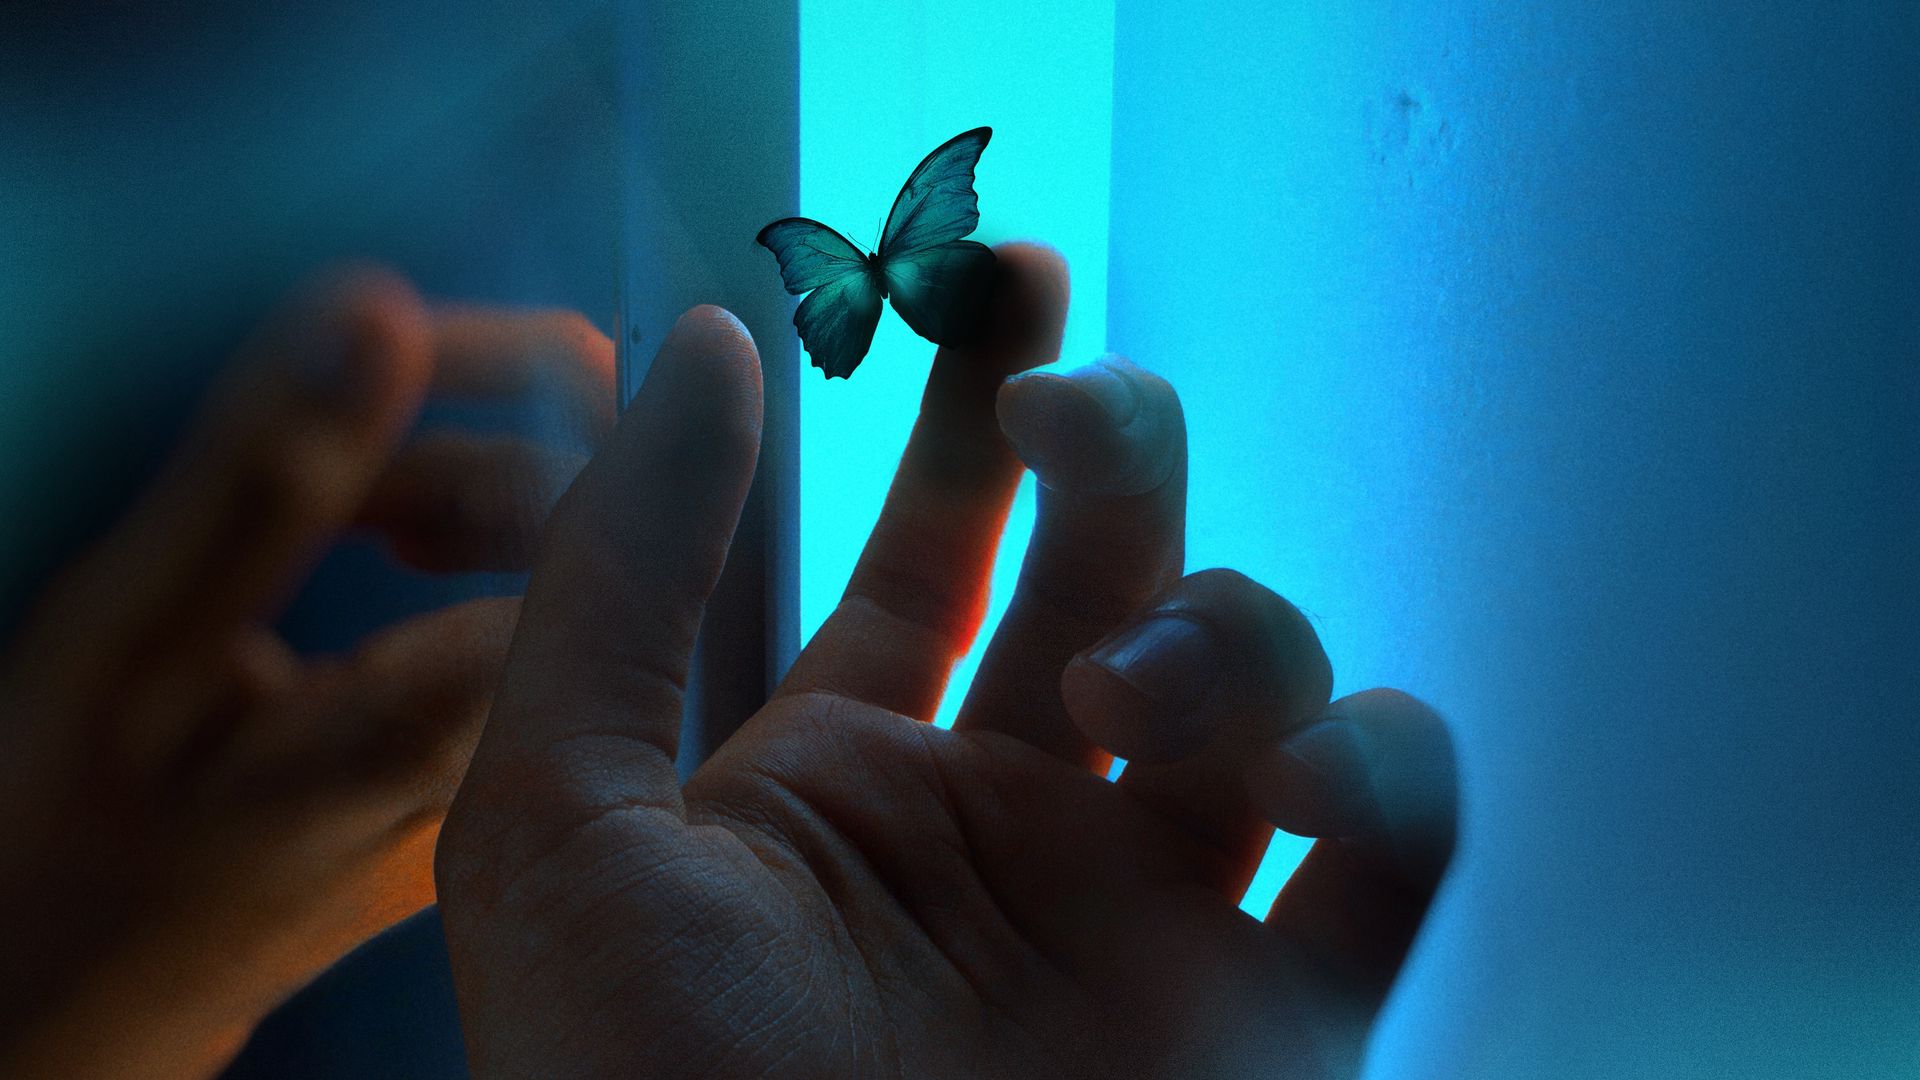 На руку бабочка